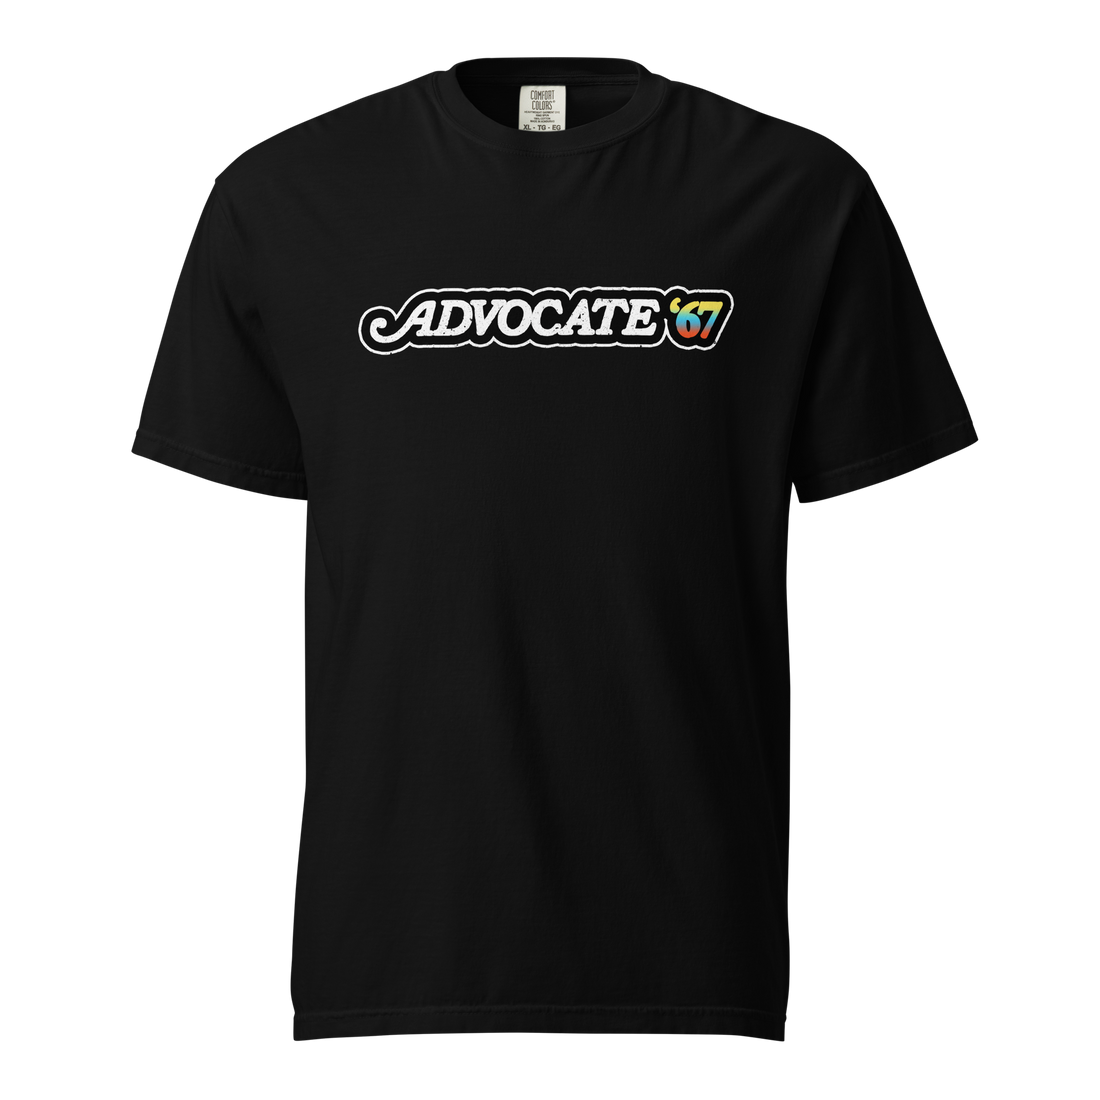 Advocate ‘67 Unisex Garment-dyed Heavyweight T-shirt (Rainbow)